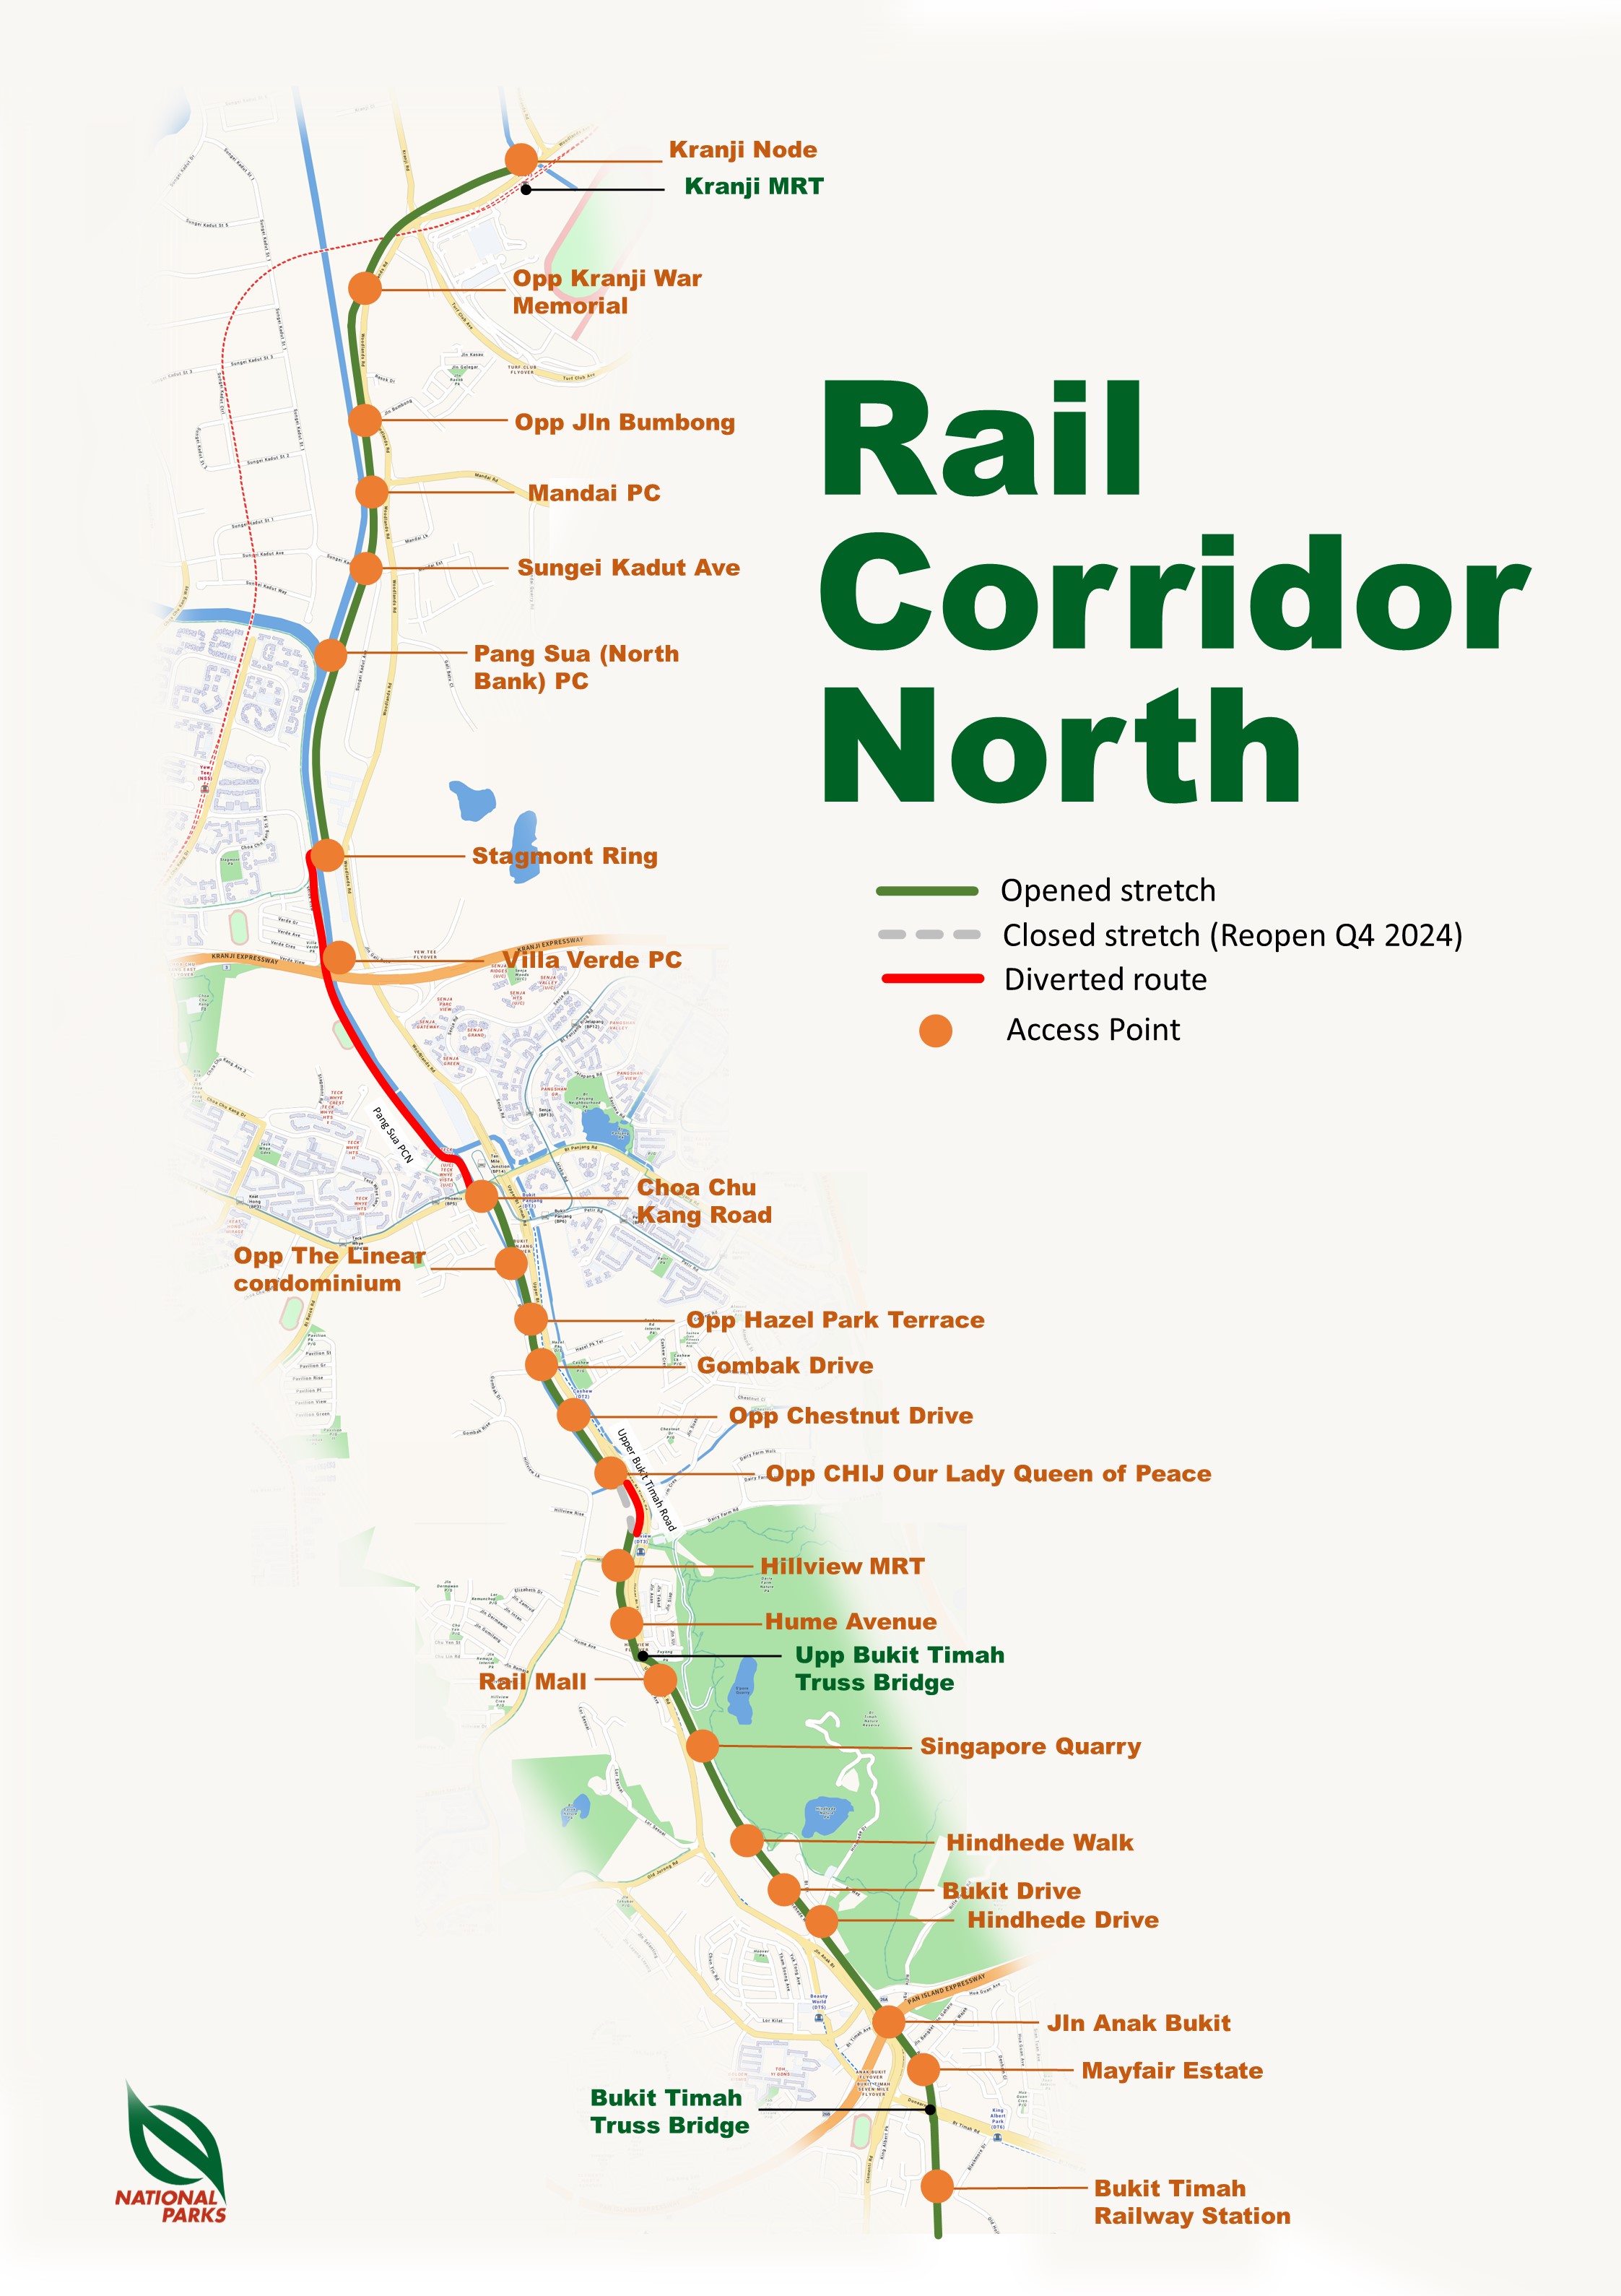 Access points of Rail Corridor North